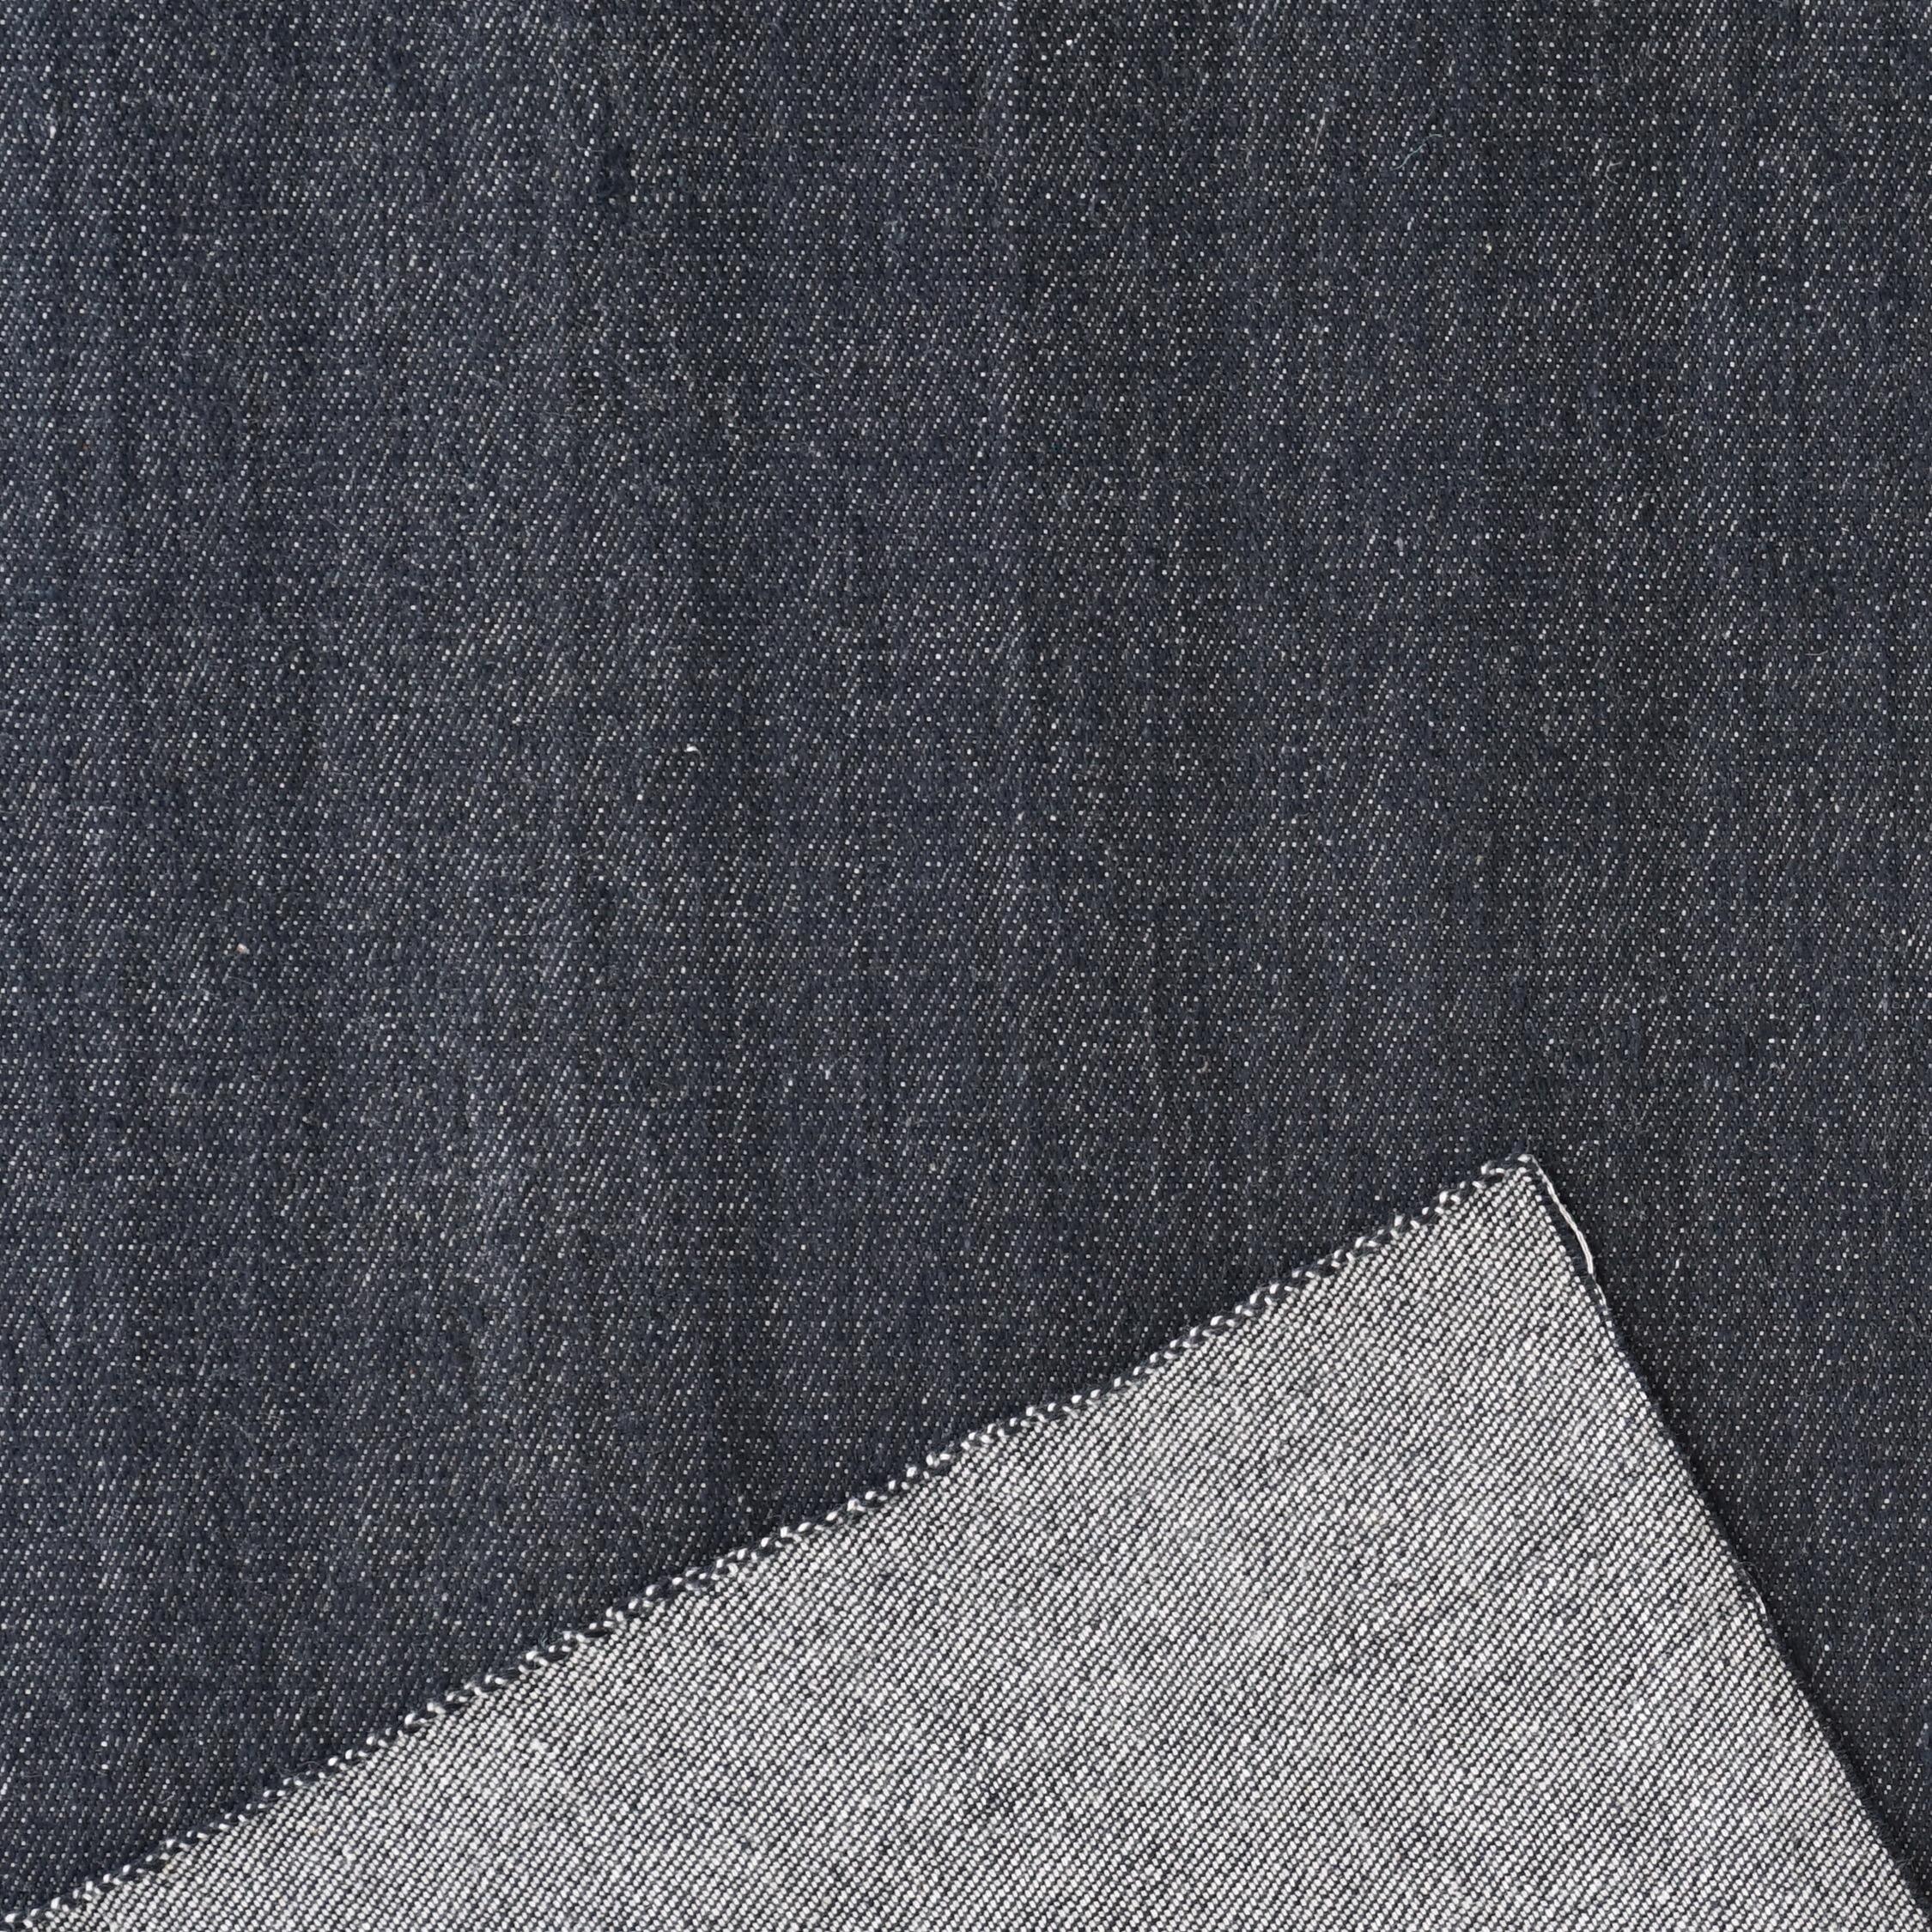 KJC07 - Black Handloom Woven Denim - Organic Cotton - Flat